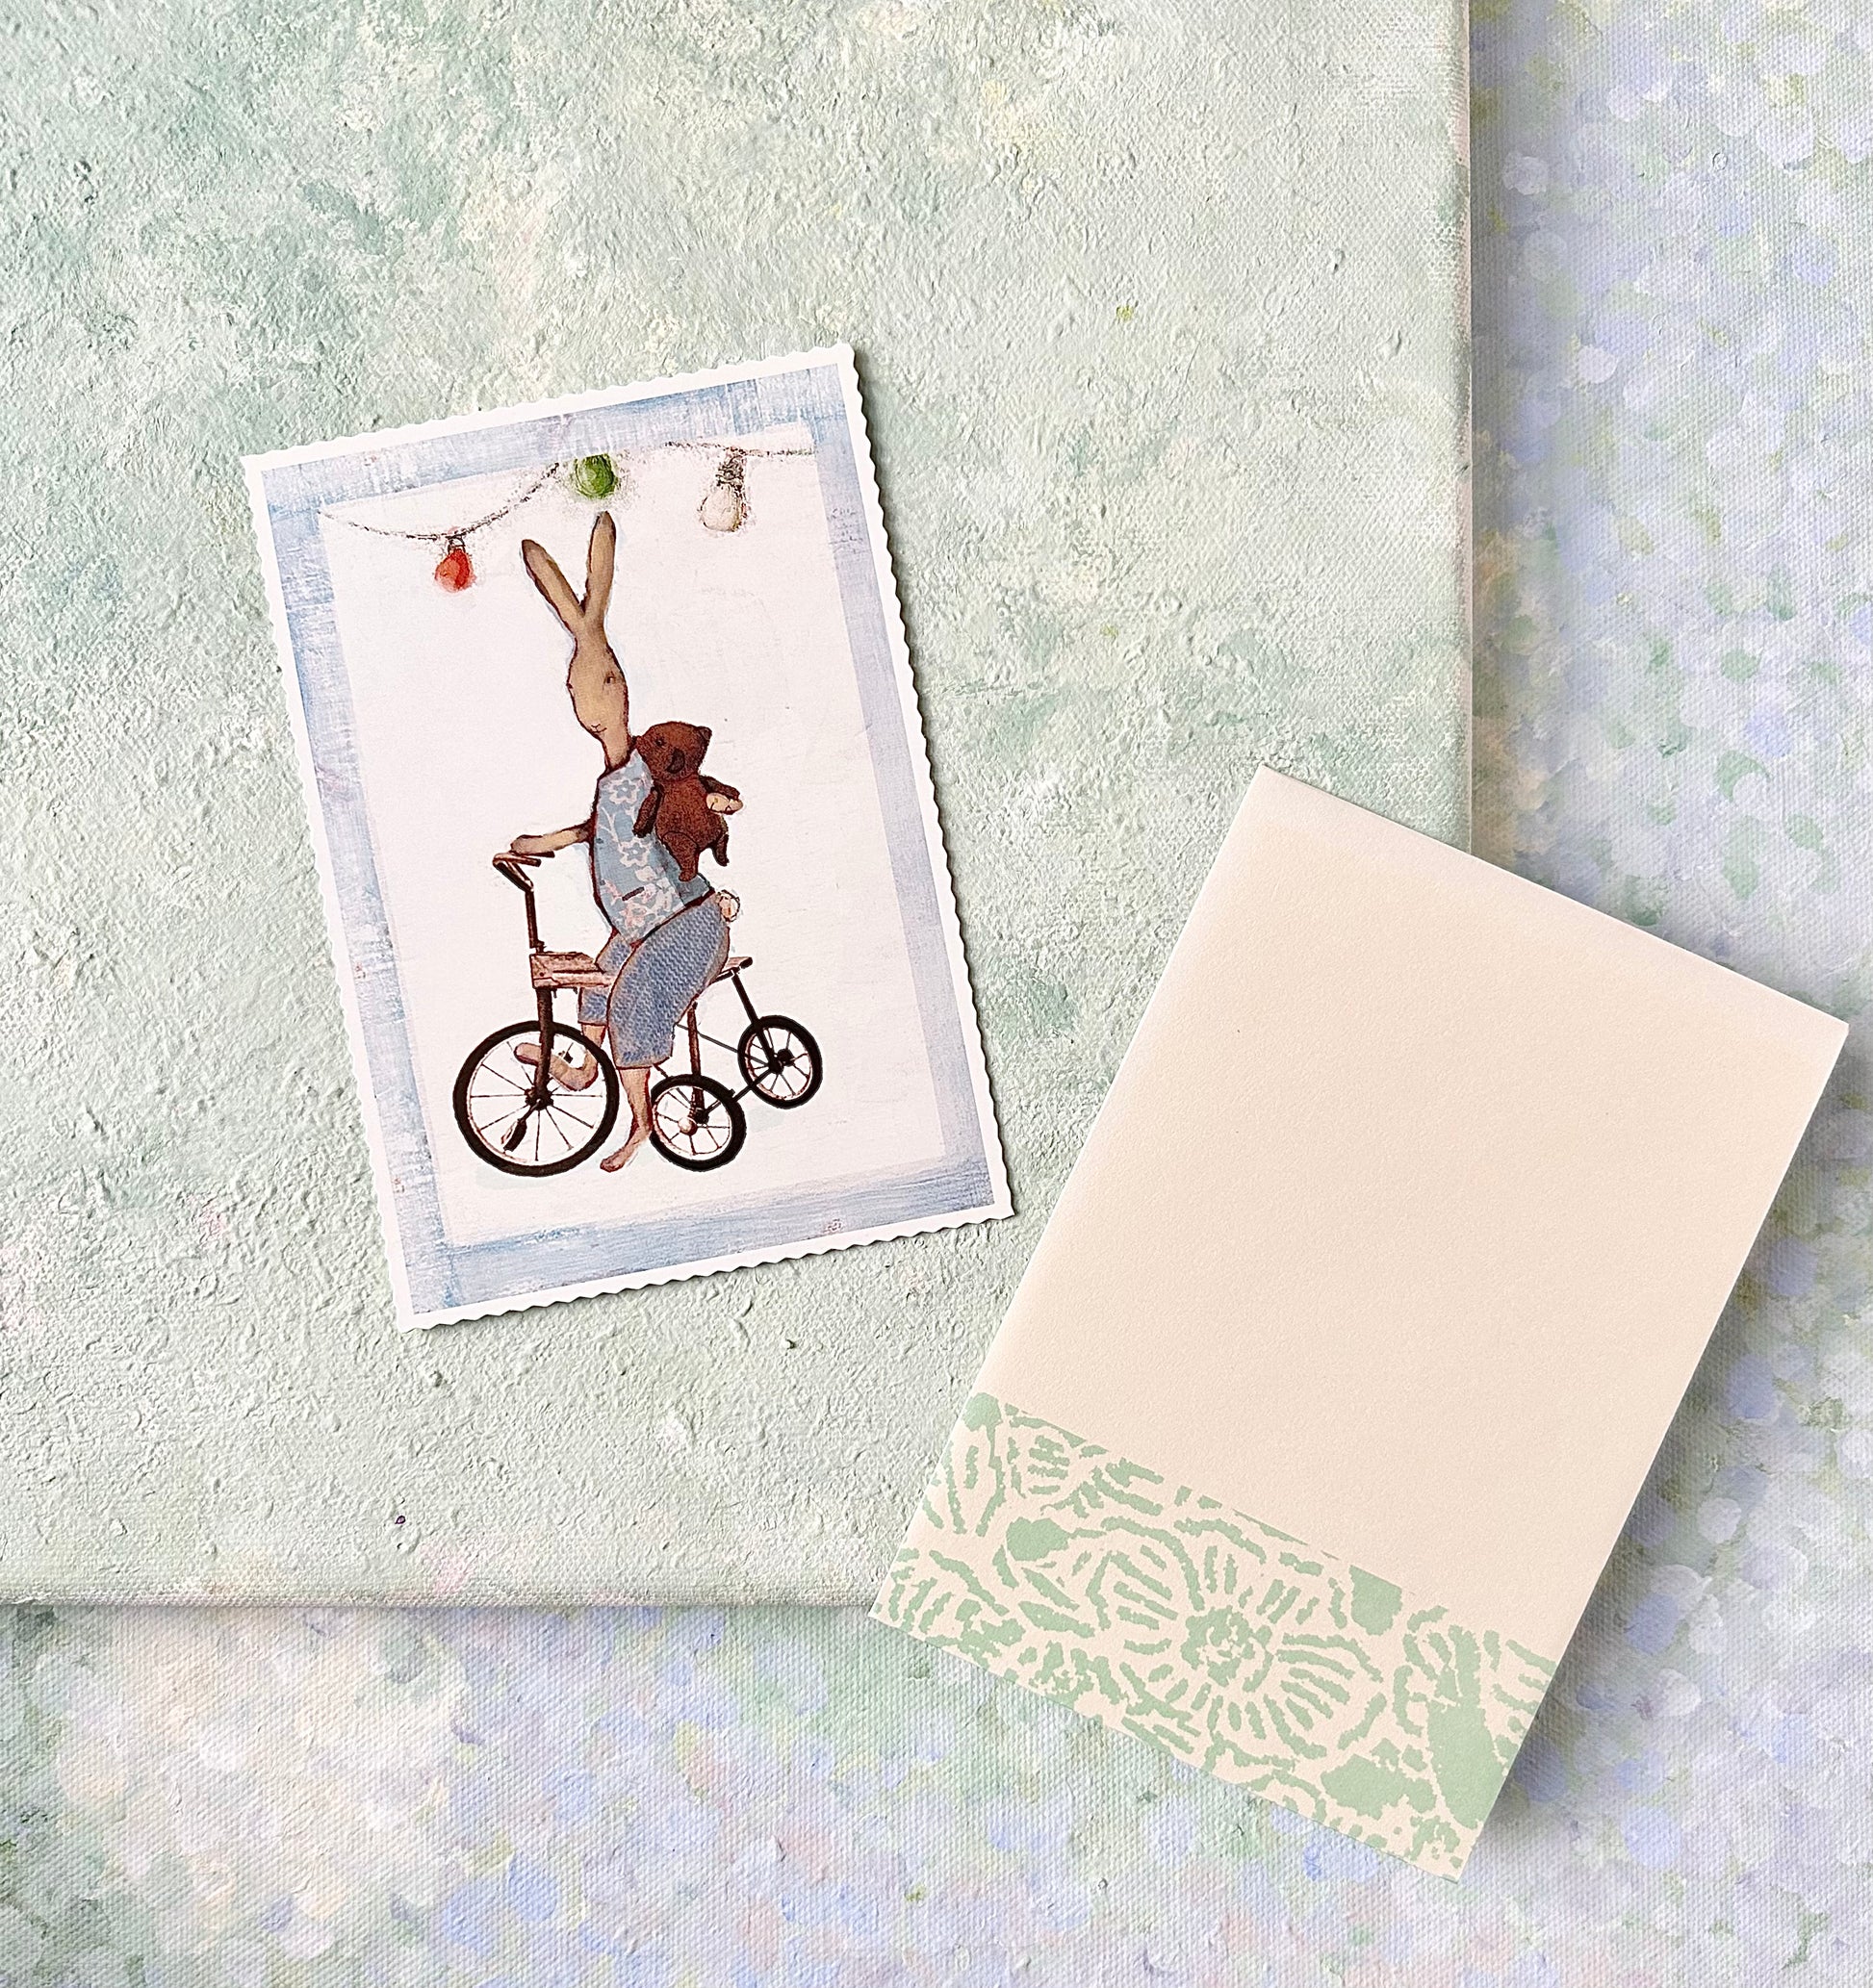 Card “Rabbit Boy on Bike” - 2008